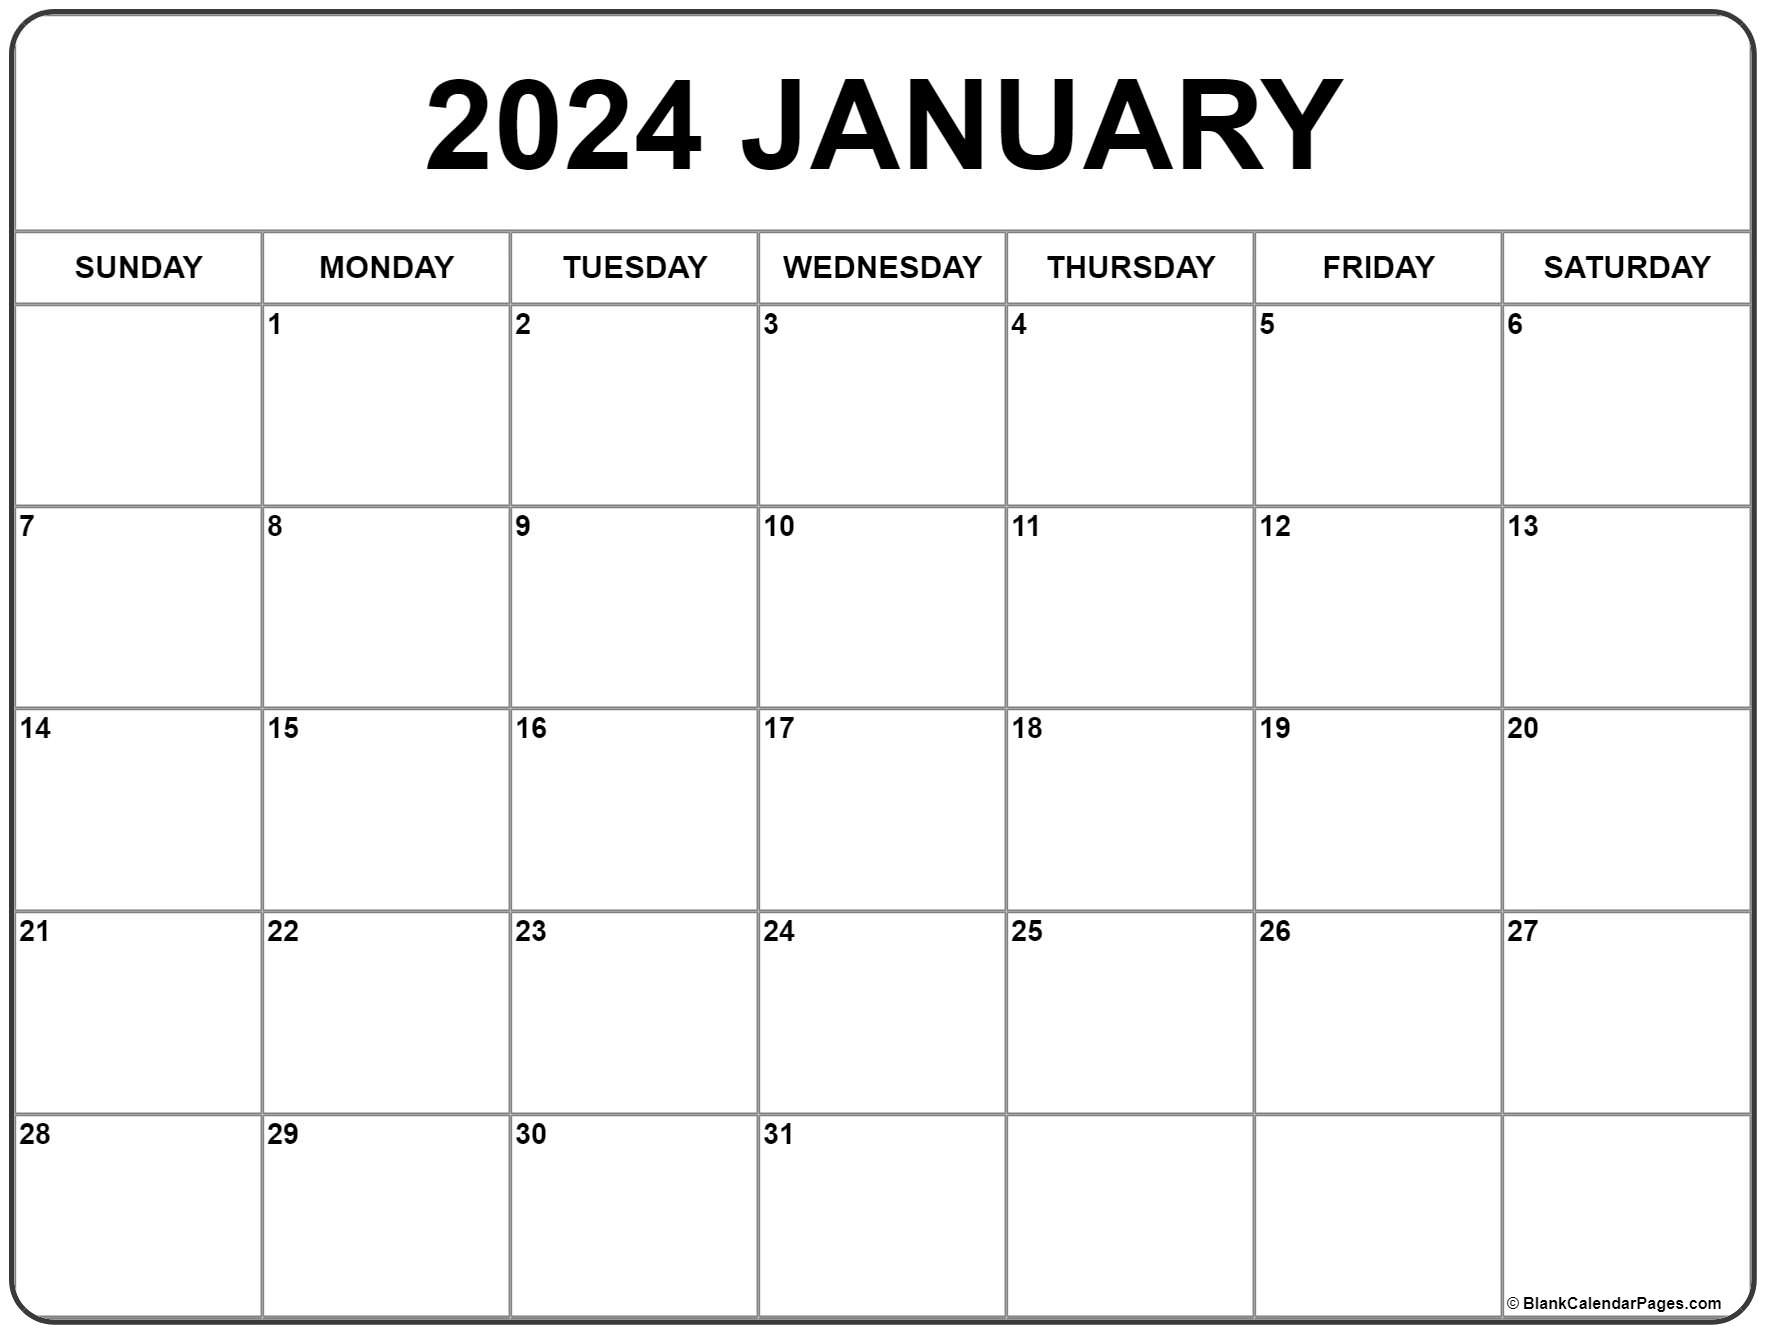 January 2024 Calendar | Free Printable Calendar for January 2024 Calendar Free Printable Calendar